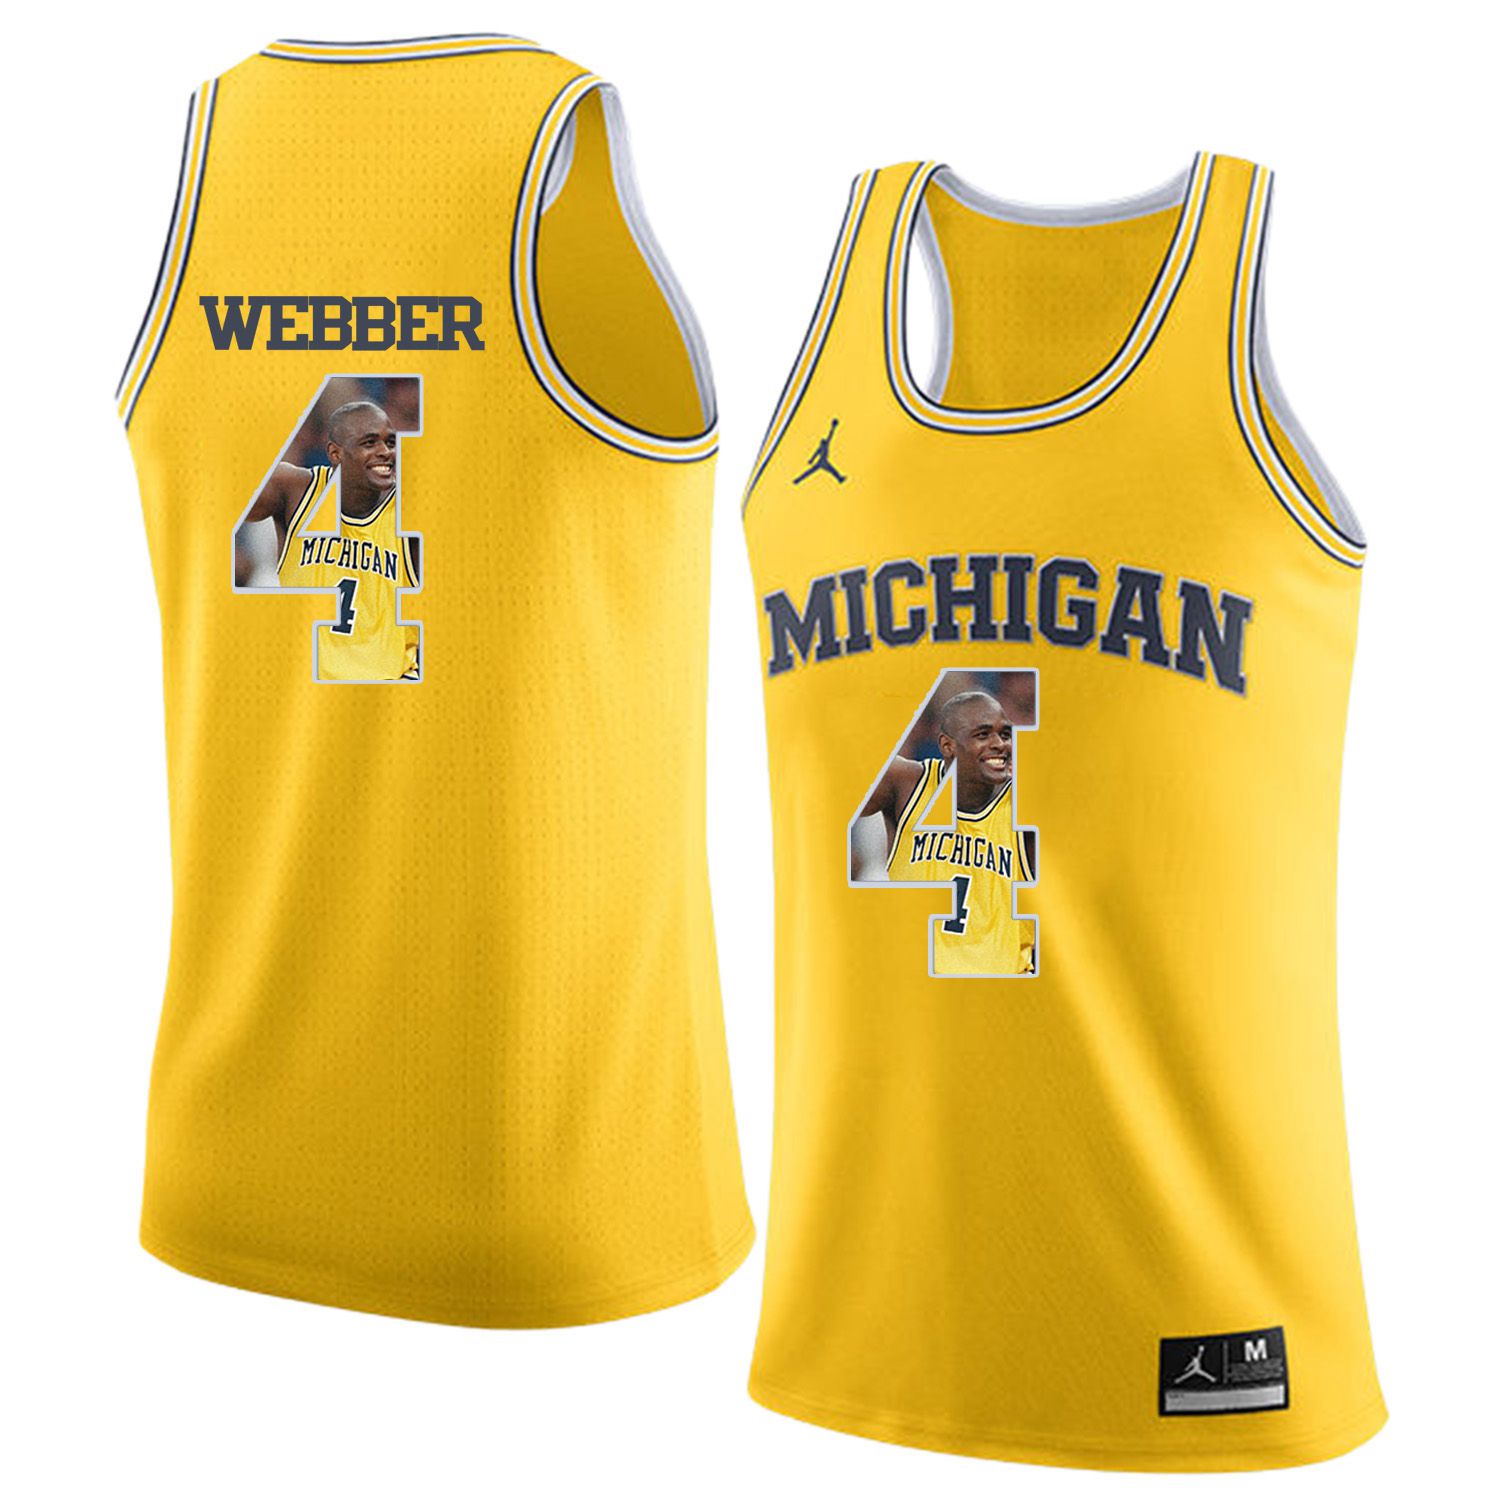 Men Jordan University of Michigan Basketball Yellow 4 Webber Fashion Edition Customized NCAA Jerseys